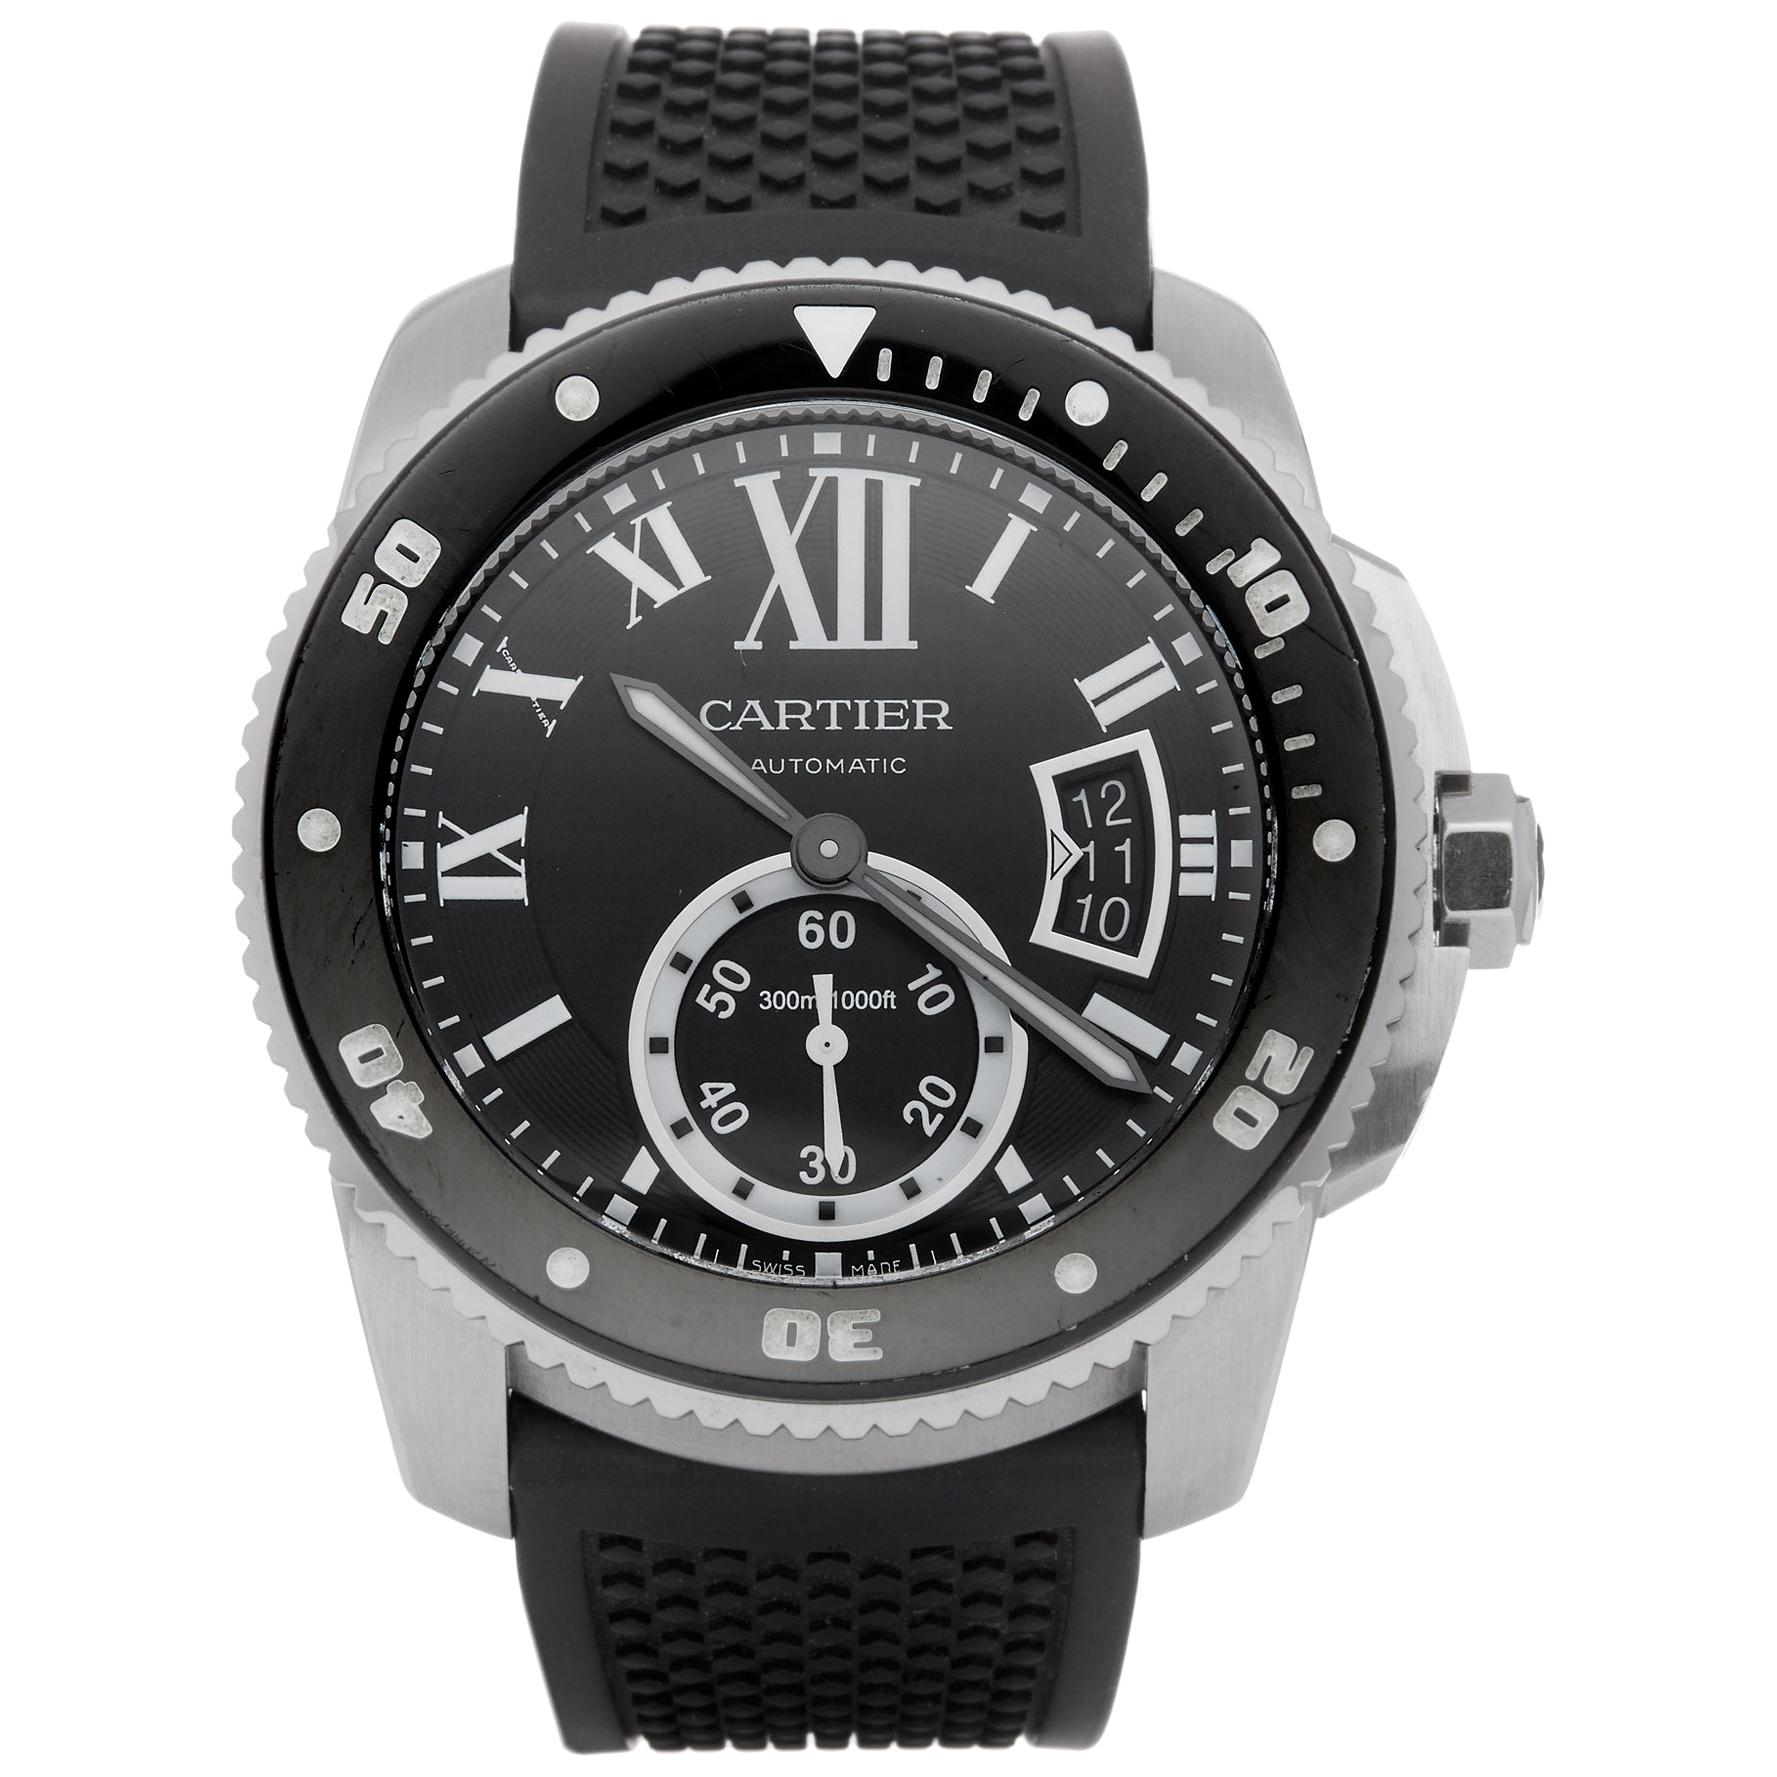 Cartier Calibre de Cartier 0 3729 or W7100056 Men's Stainless Steel Diver Watch